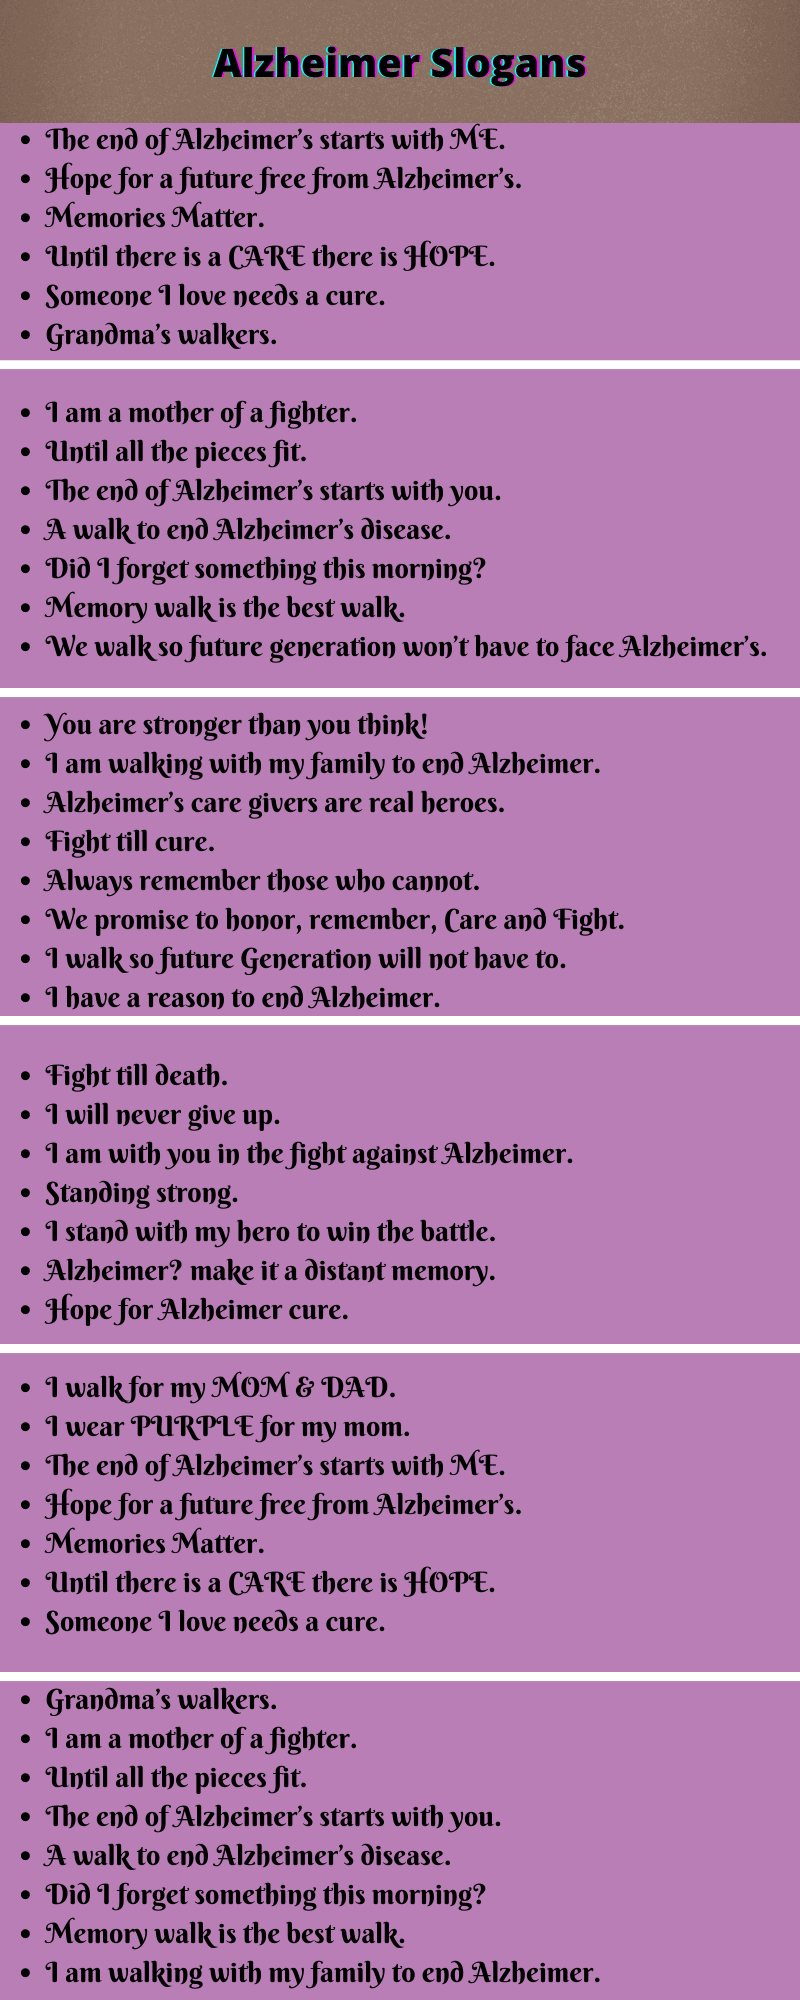 Alzheimer’s Slogans 